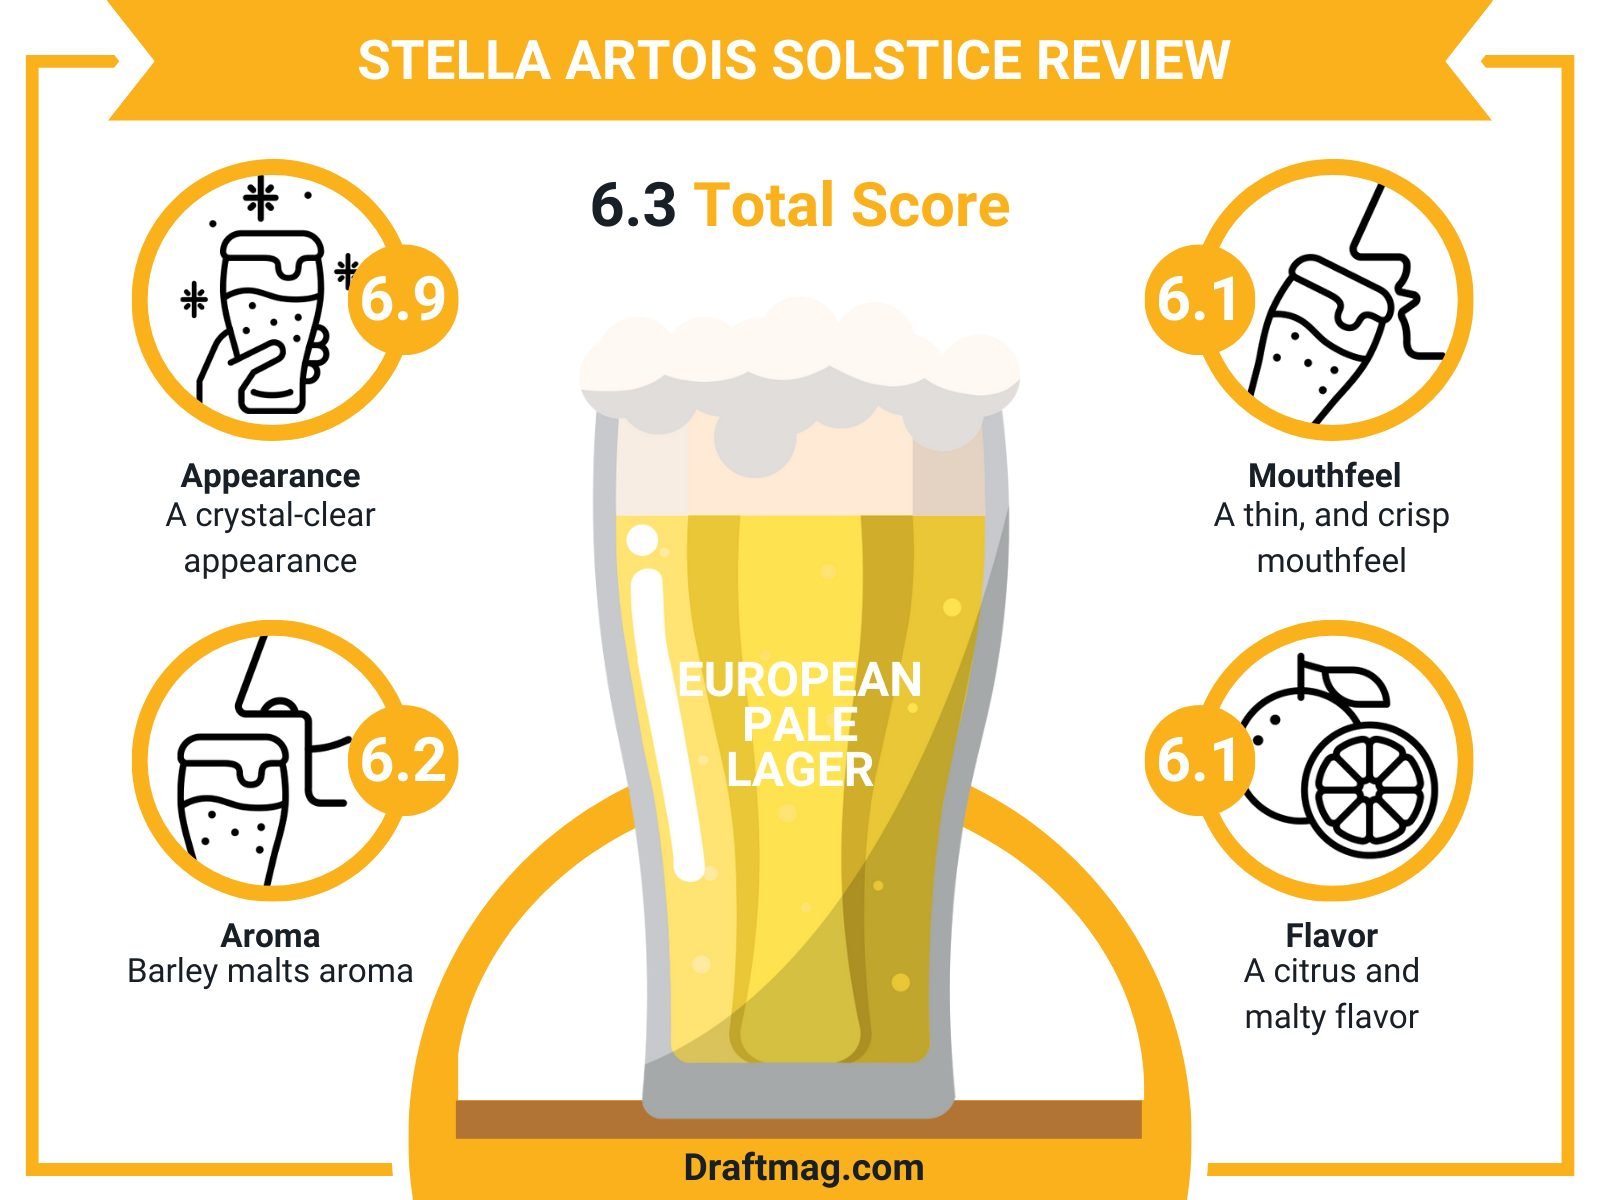 Stella Artois Solstice Review Infographic